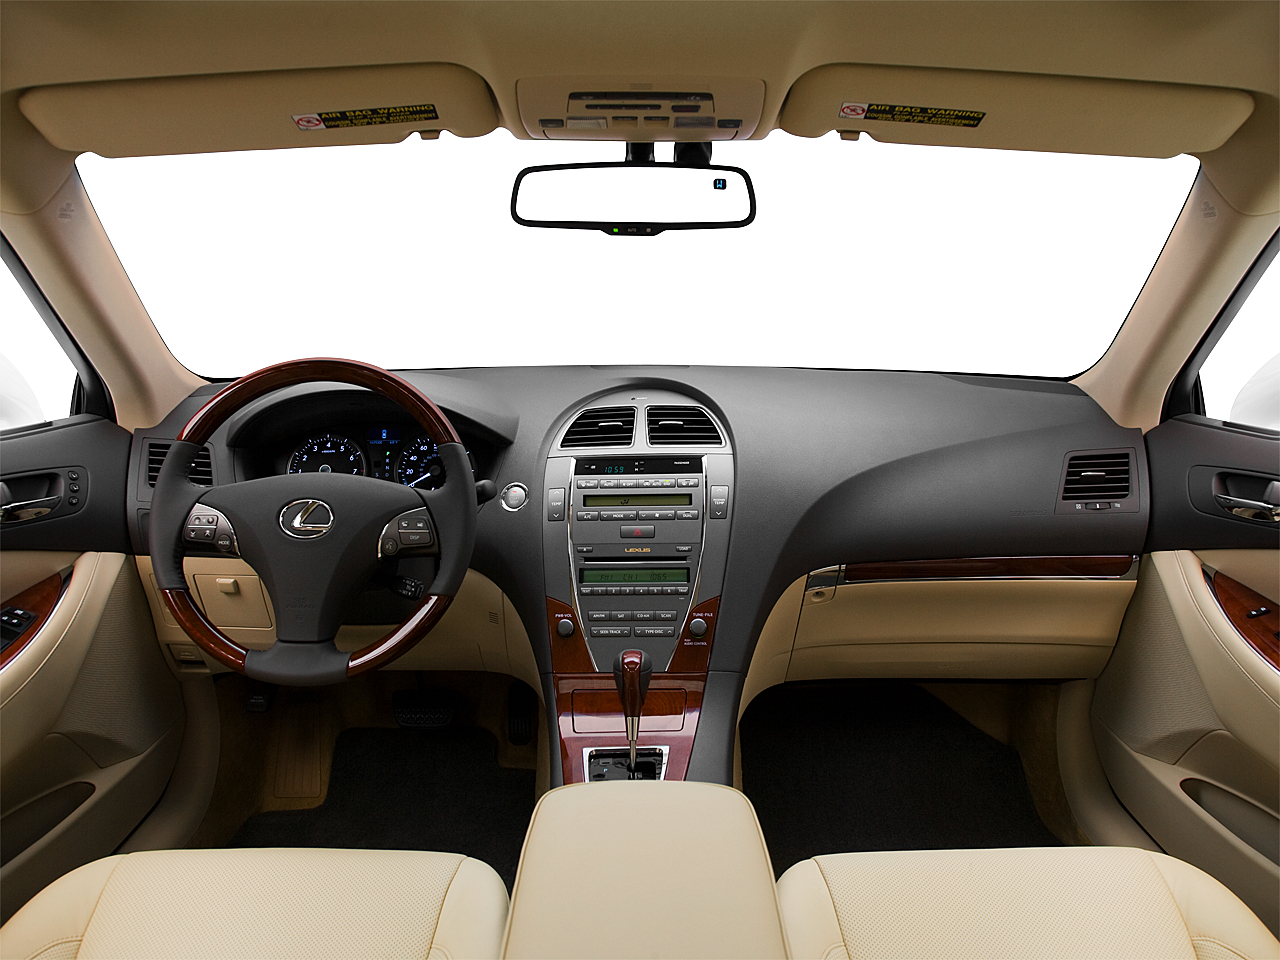 2010 Lexus ES 350 4dr Sedan - Research - GrooveCar